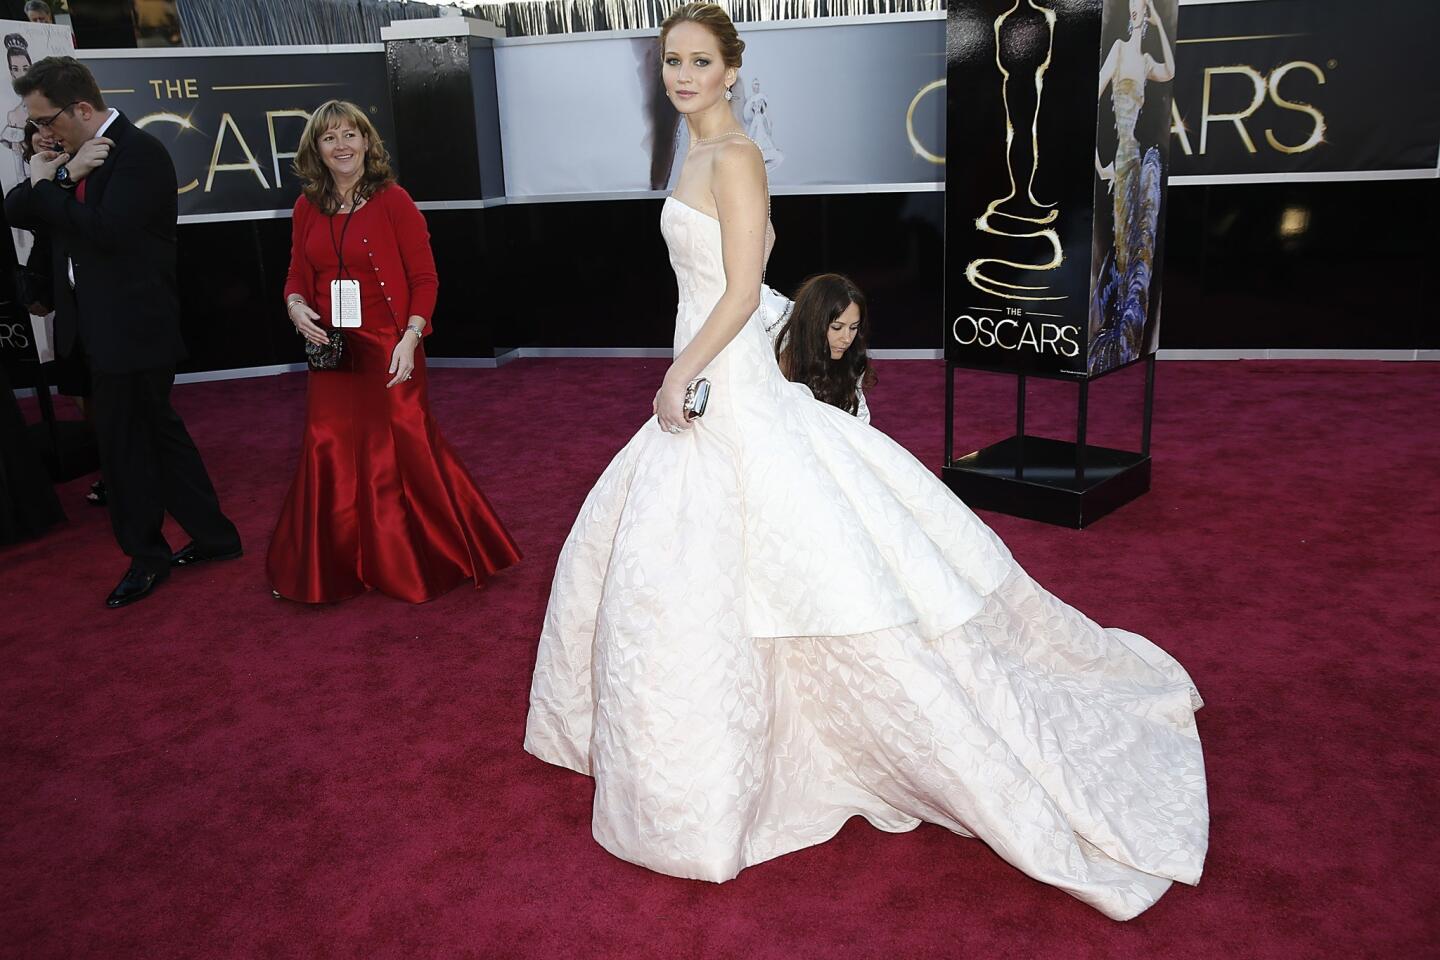 Oscars 2013 arrivals: Jennifer Lawrence